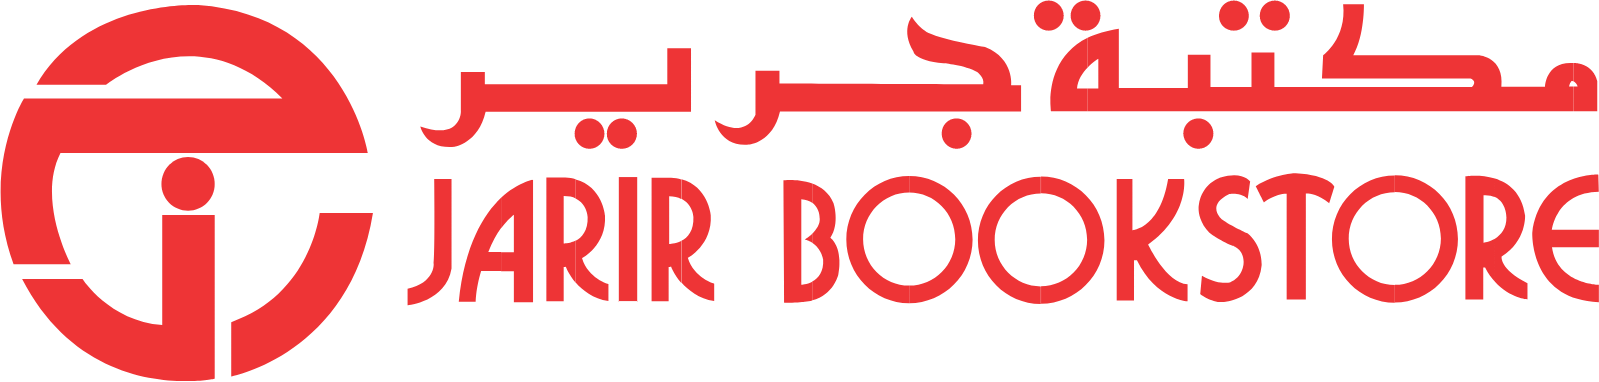 Jarir logo large (transparent PNG)